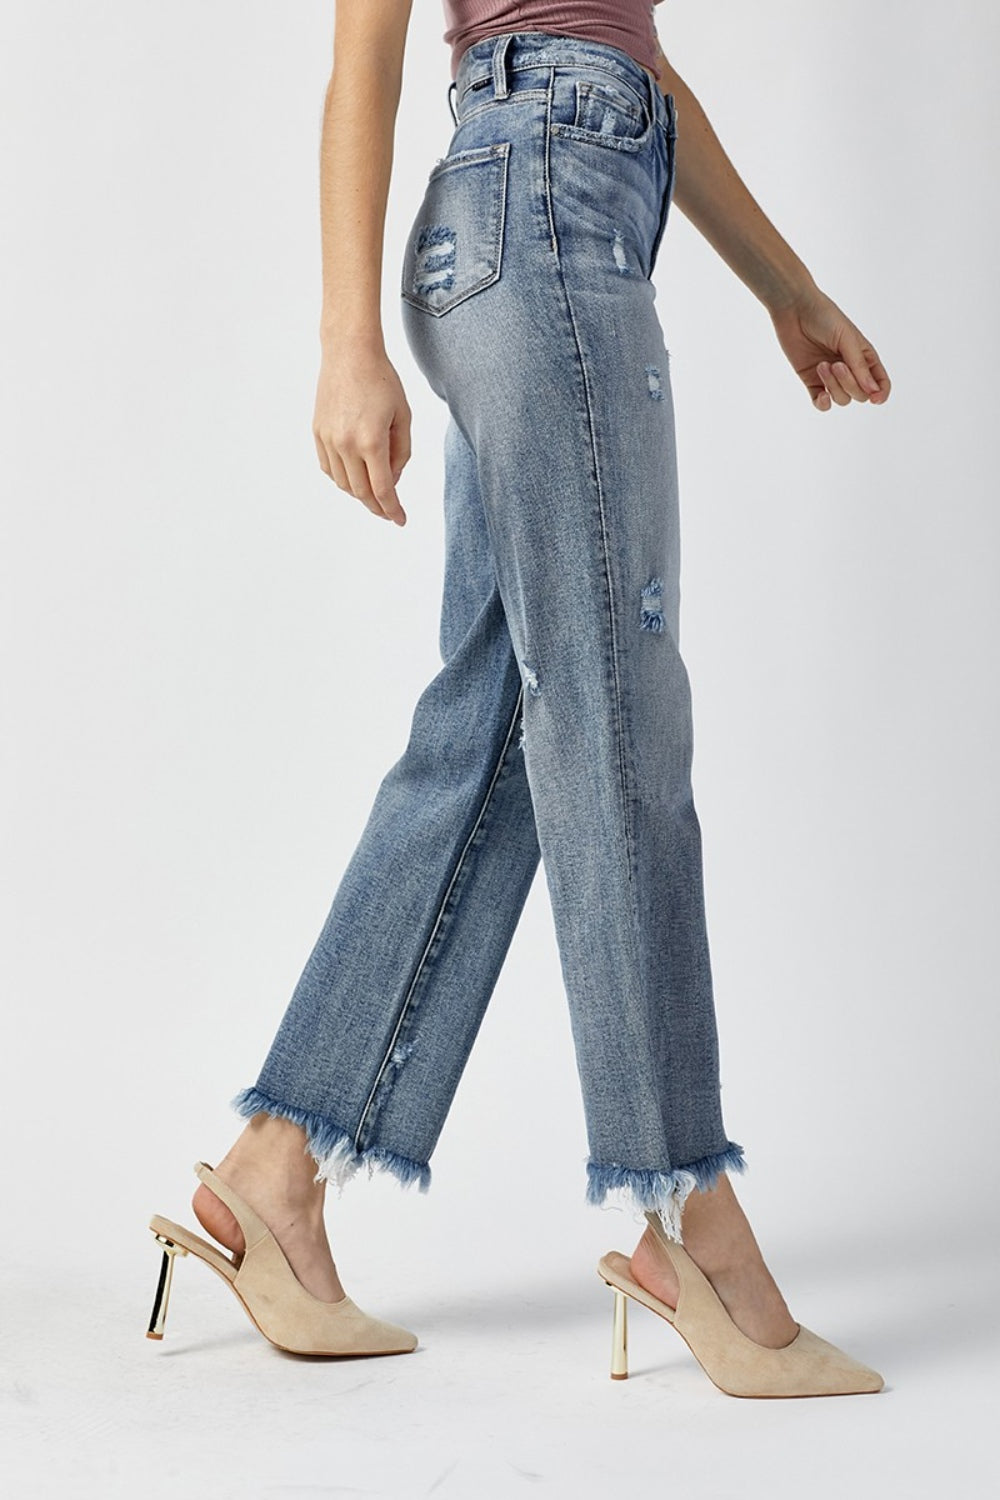 Layton RISEN Jeans